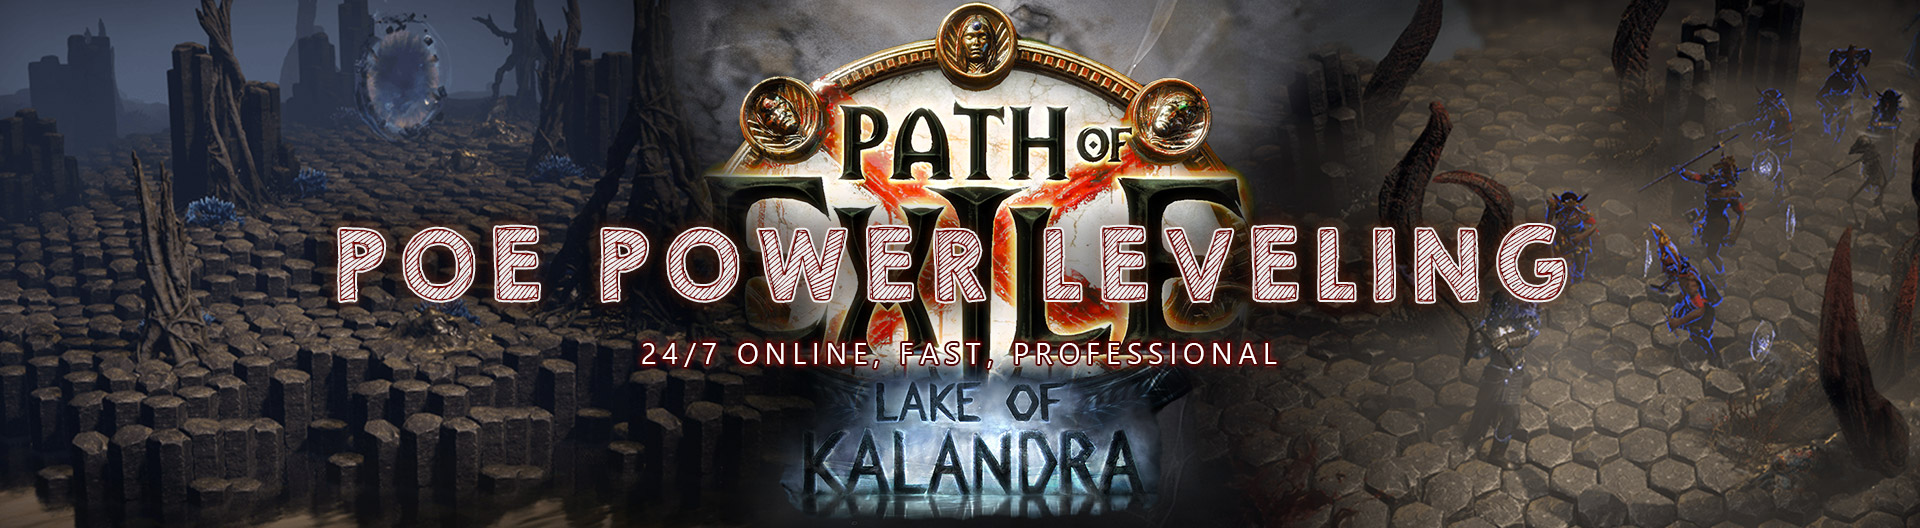 Buy PoE Power leveling in 3.19 Lake of Kalandra